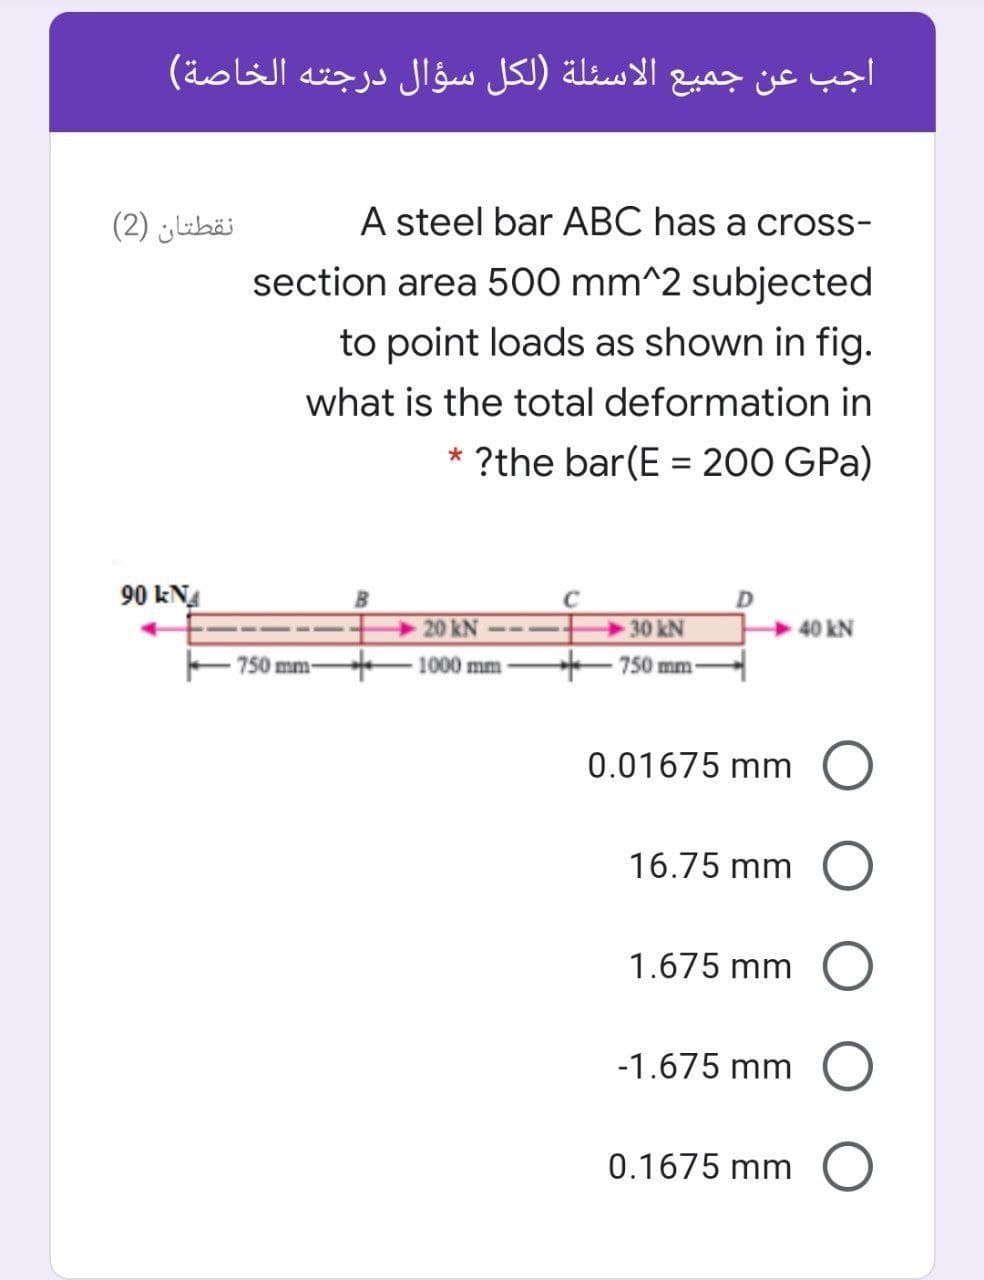 اجب عن جميع الأسئلة )لكل سؤال درجته الخاصة(
نقطتان )2(
A steel bar ABC has a cross-
section area 500 mm^2 subjected
to point loads as shown in fig.
what is the total deformation in
* ?the bar(E = 200 GPa)
%3D
90 kNA
20 kN
30 kN
- 750 mm-
- 1000 mm -
750 mm-
0.01675 mm
16.75 mm
1.675 mm
-1.675 mm
0.1675 mm
